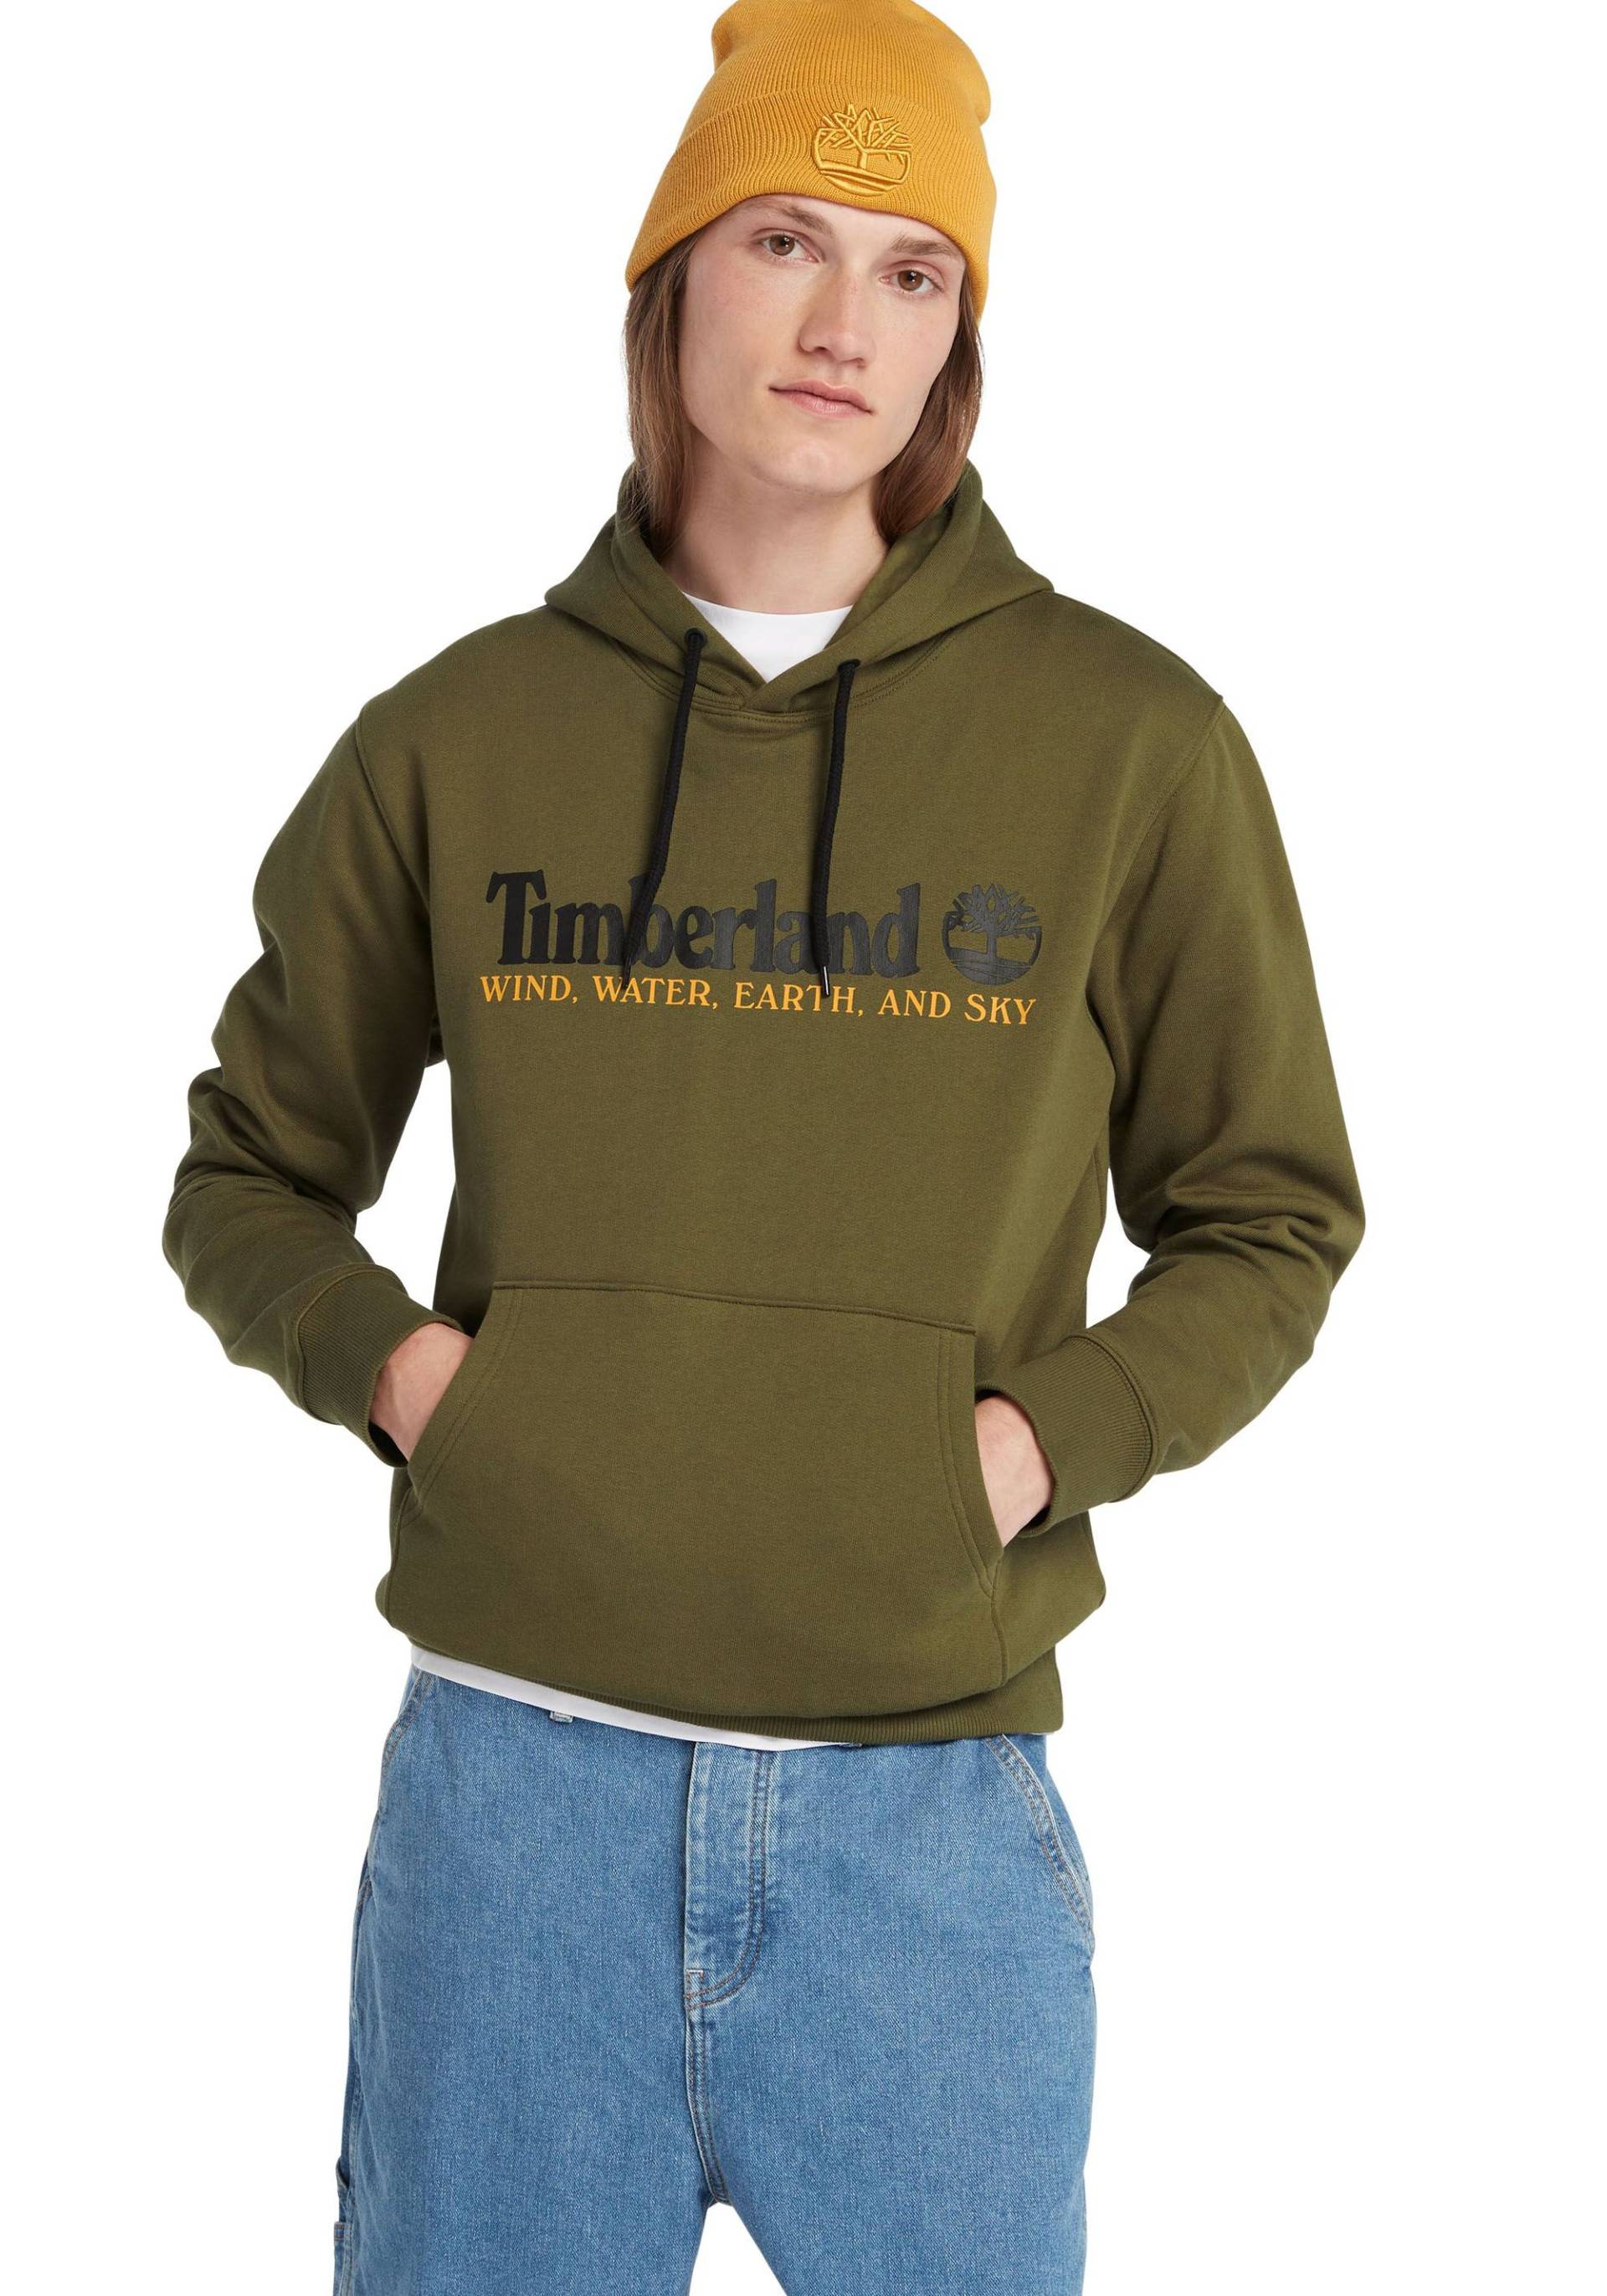 Timberland Kapuzensweatshirt »WWES Hoodie« von Timberland